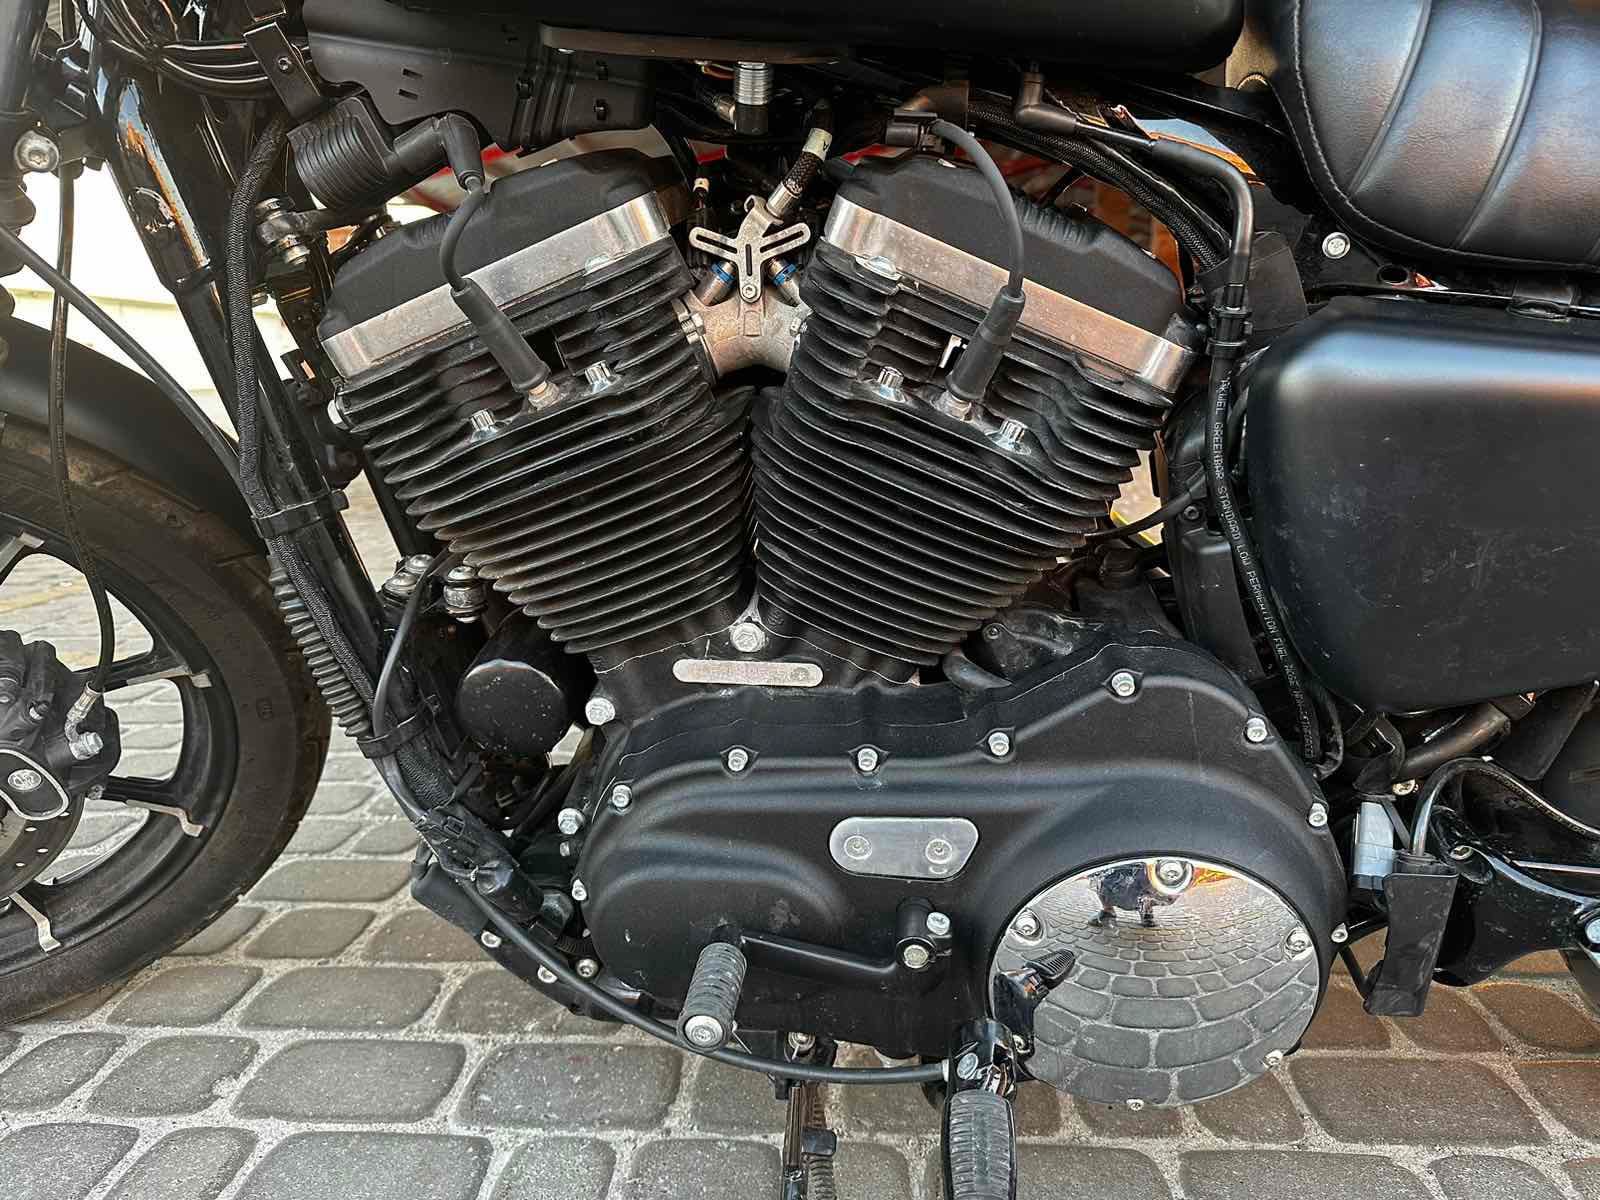 Harley-Davidson  22p 883 IRON